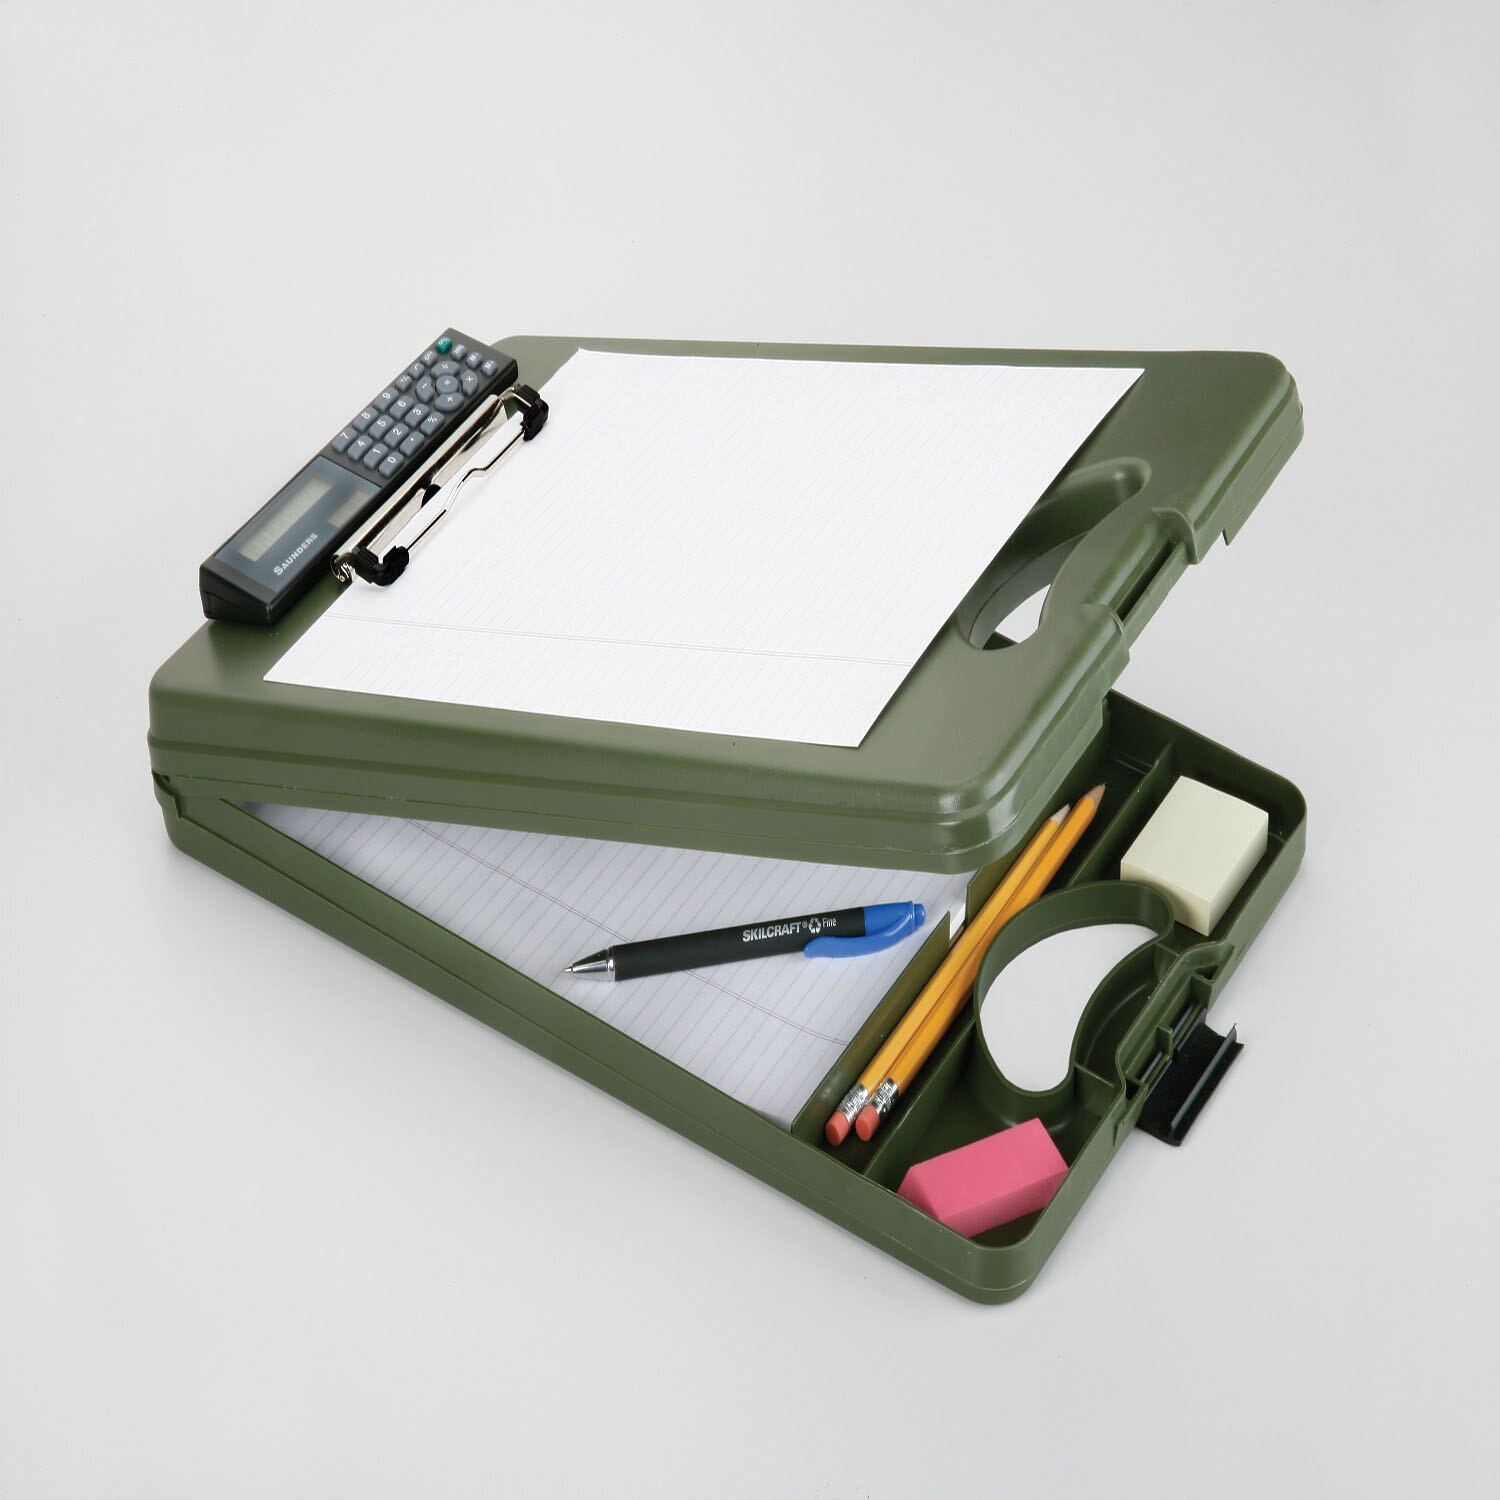 Portable Desktop Clipboard with Calculator, 10" W x 2-3/5" D x 16" H, Army Green